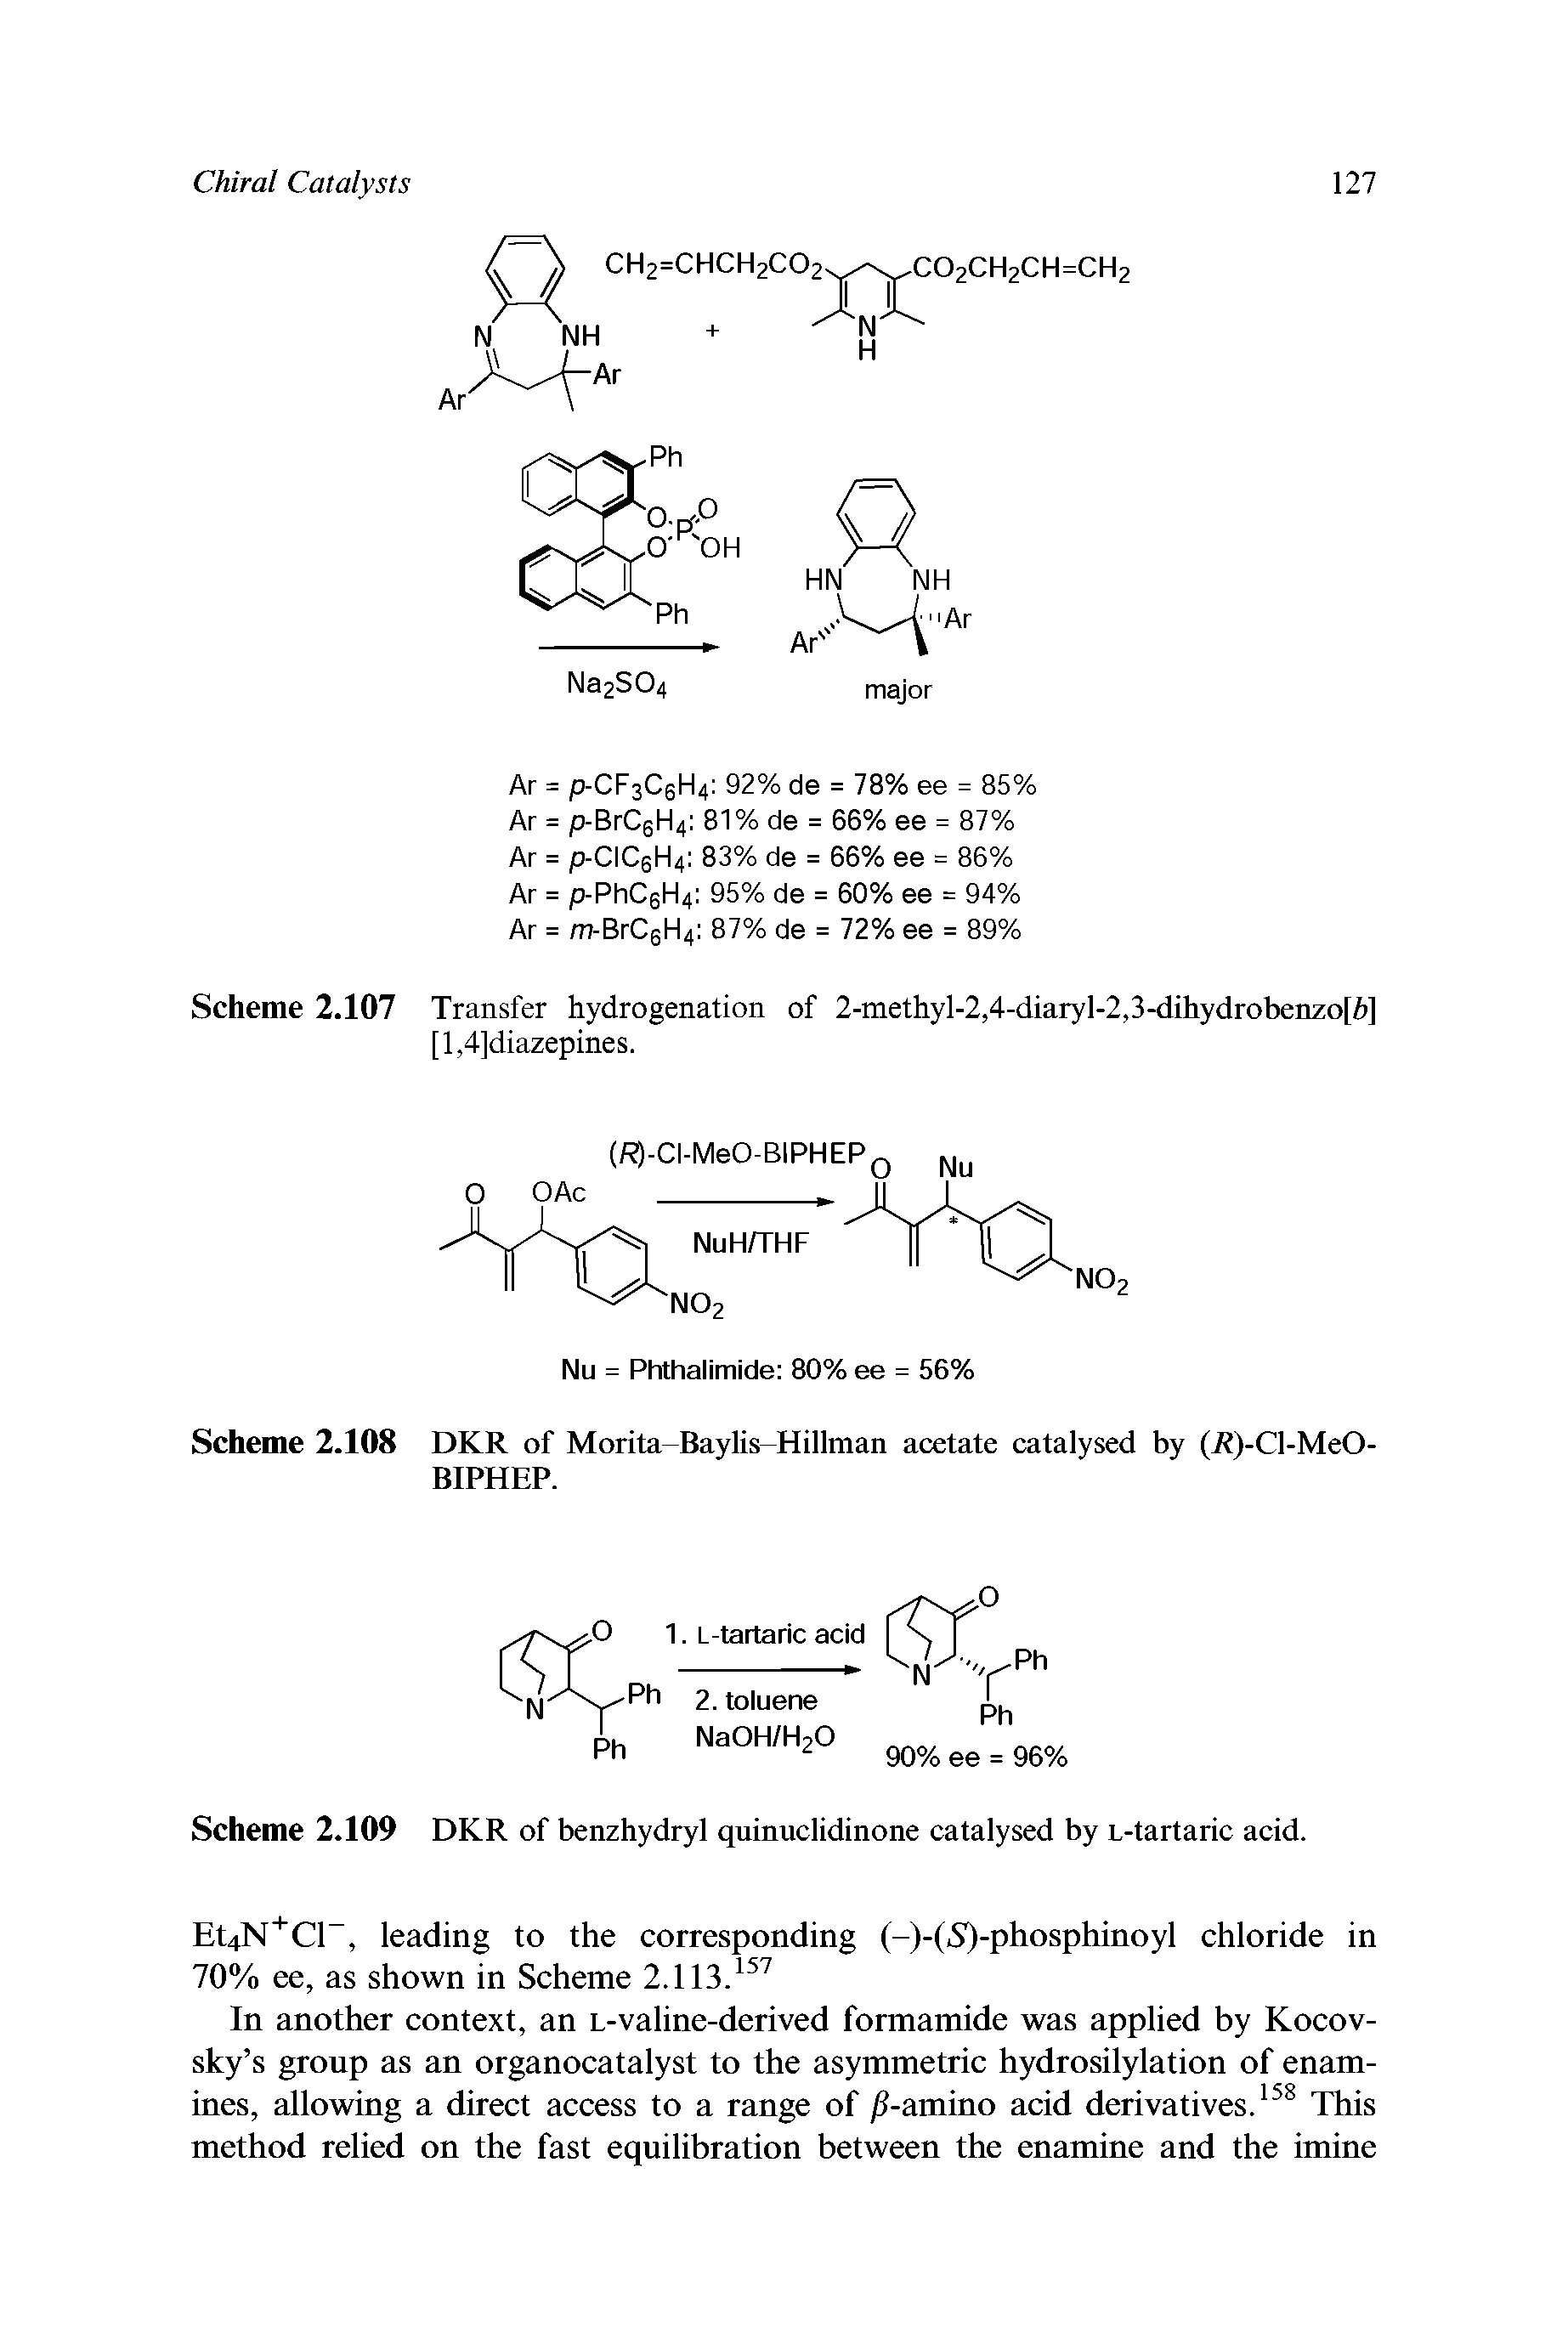 Scheme 2.108 DKR of Morita Baylis Hillman acetate catalysed by (R)-Cl-MeO-BIPHEP.